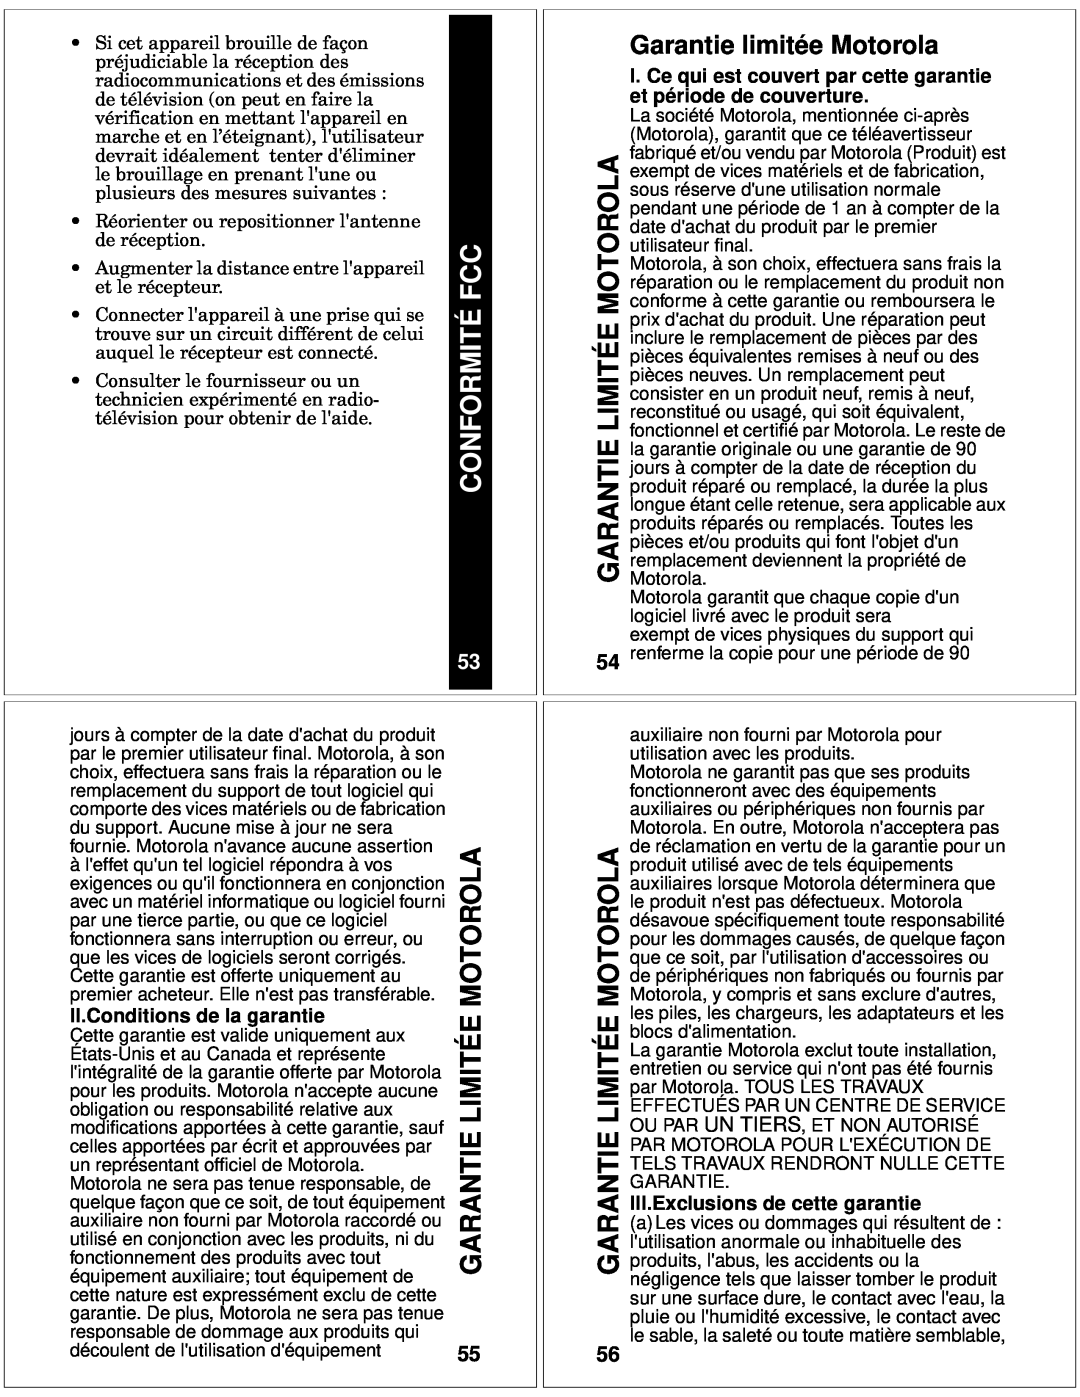 Motorola T10 manual Garantie limitée Motorola, II.Conditions de la garantie, III.Exclusions de cette garantie 